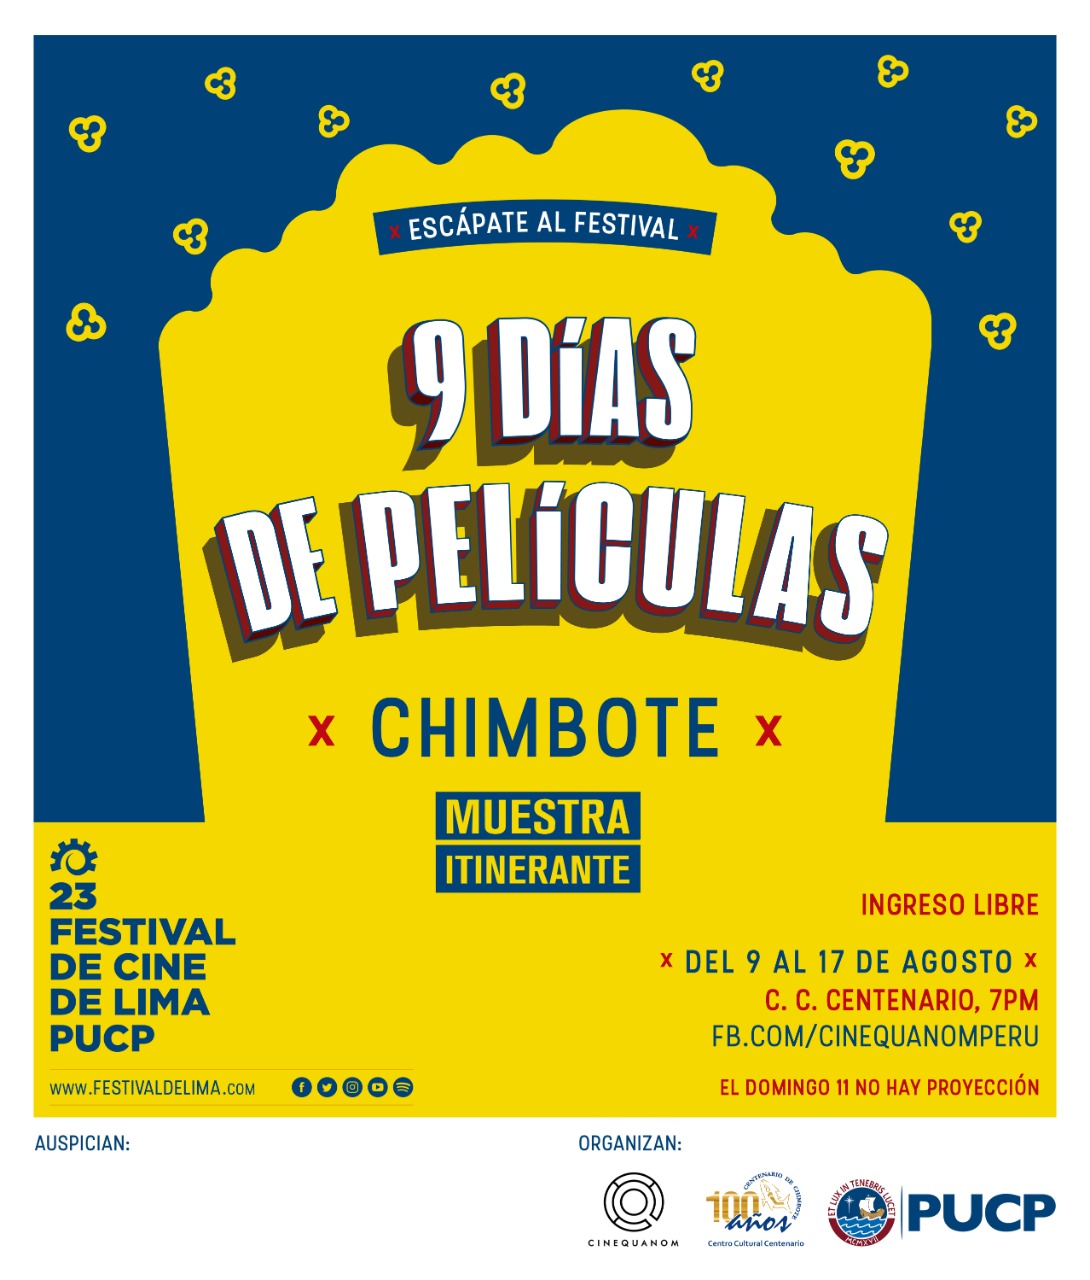 Muestra Itinerante del 23 Festival de Cine de Lima 2019